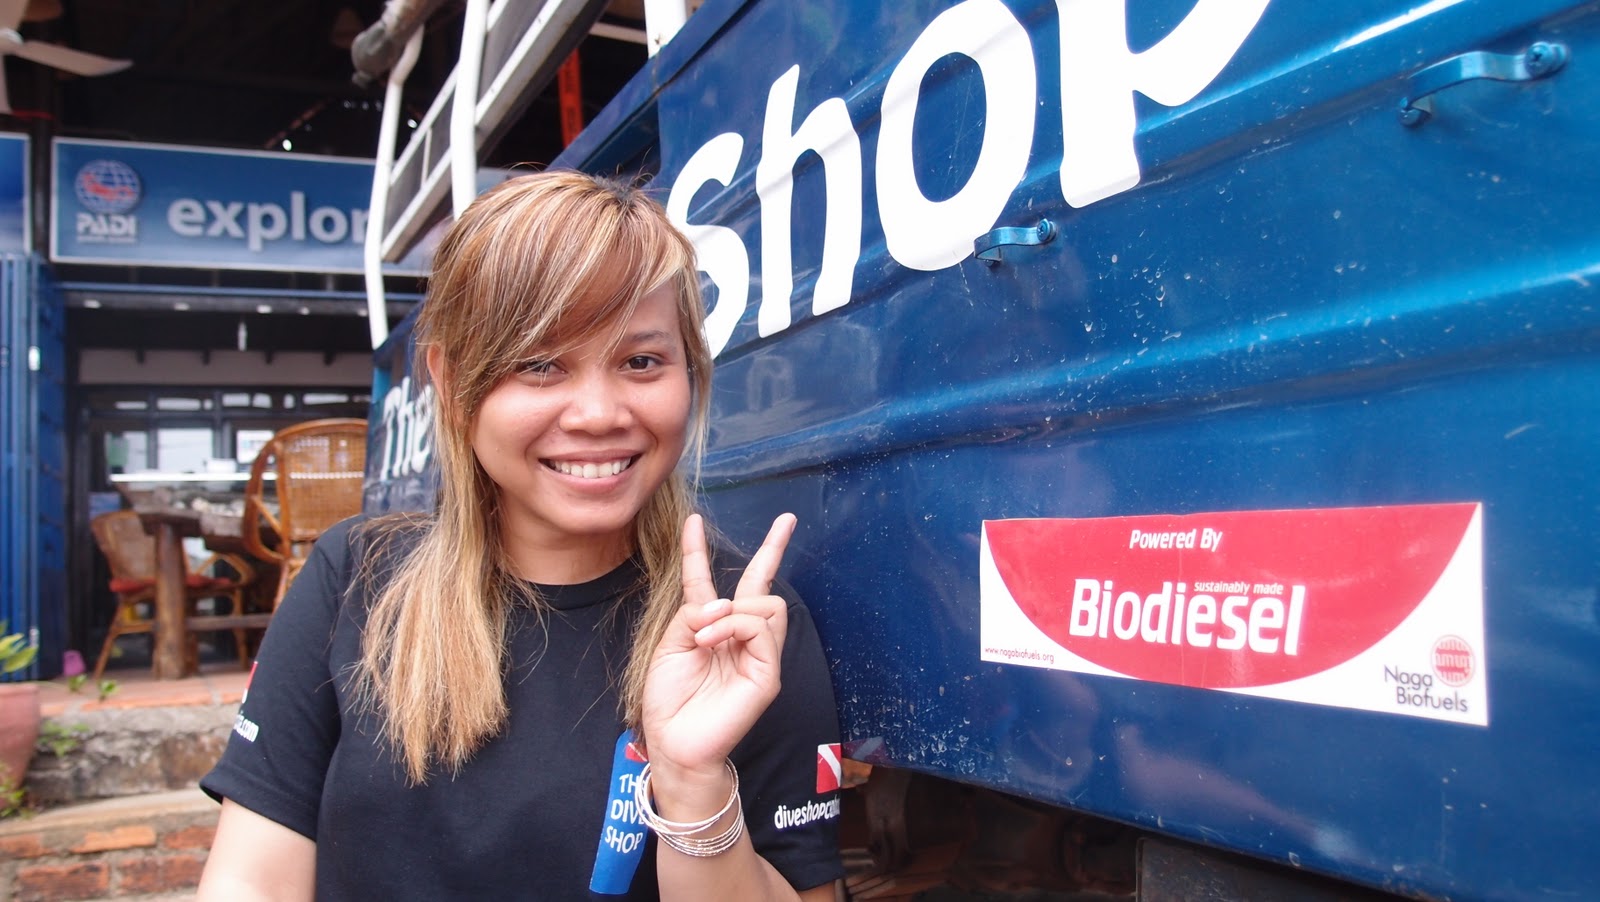 Biodiesel powered by Naga Bio Fuels